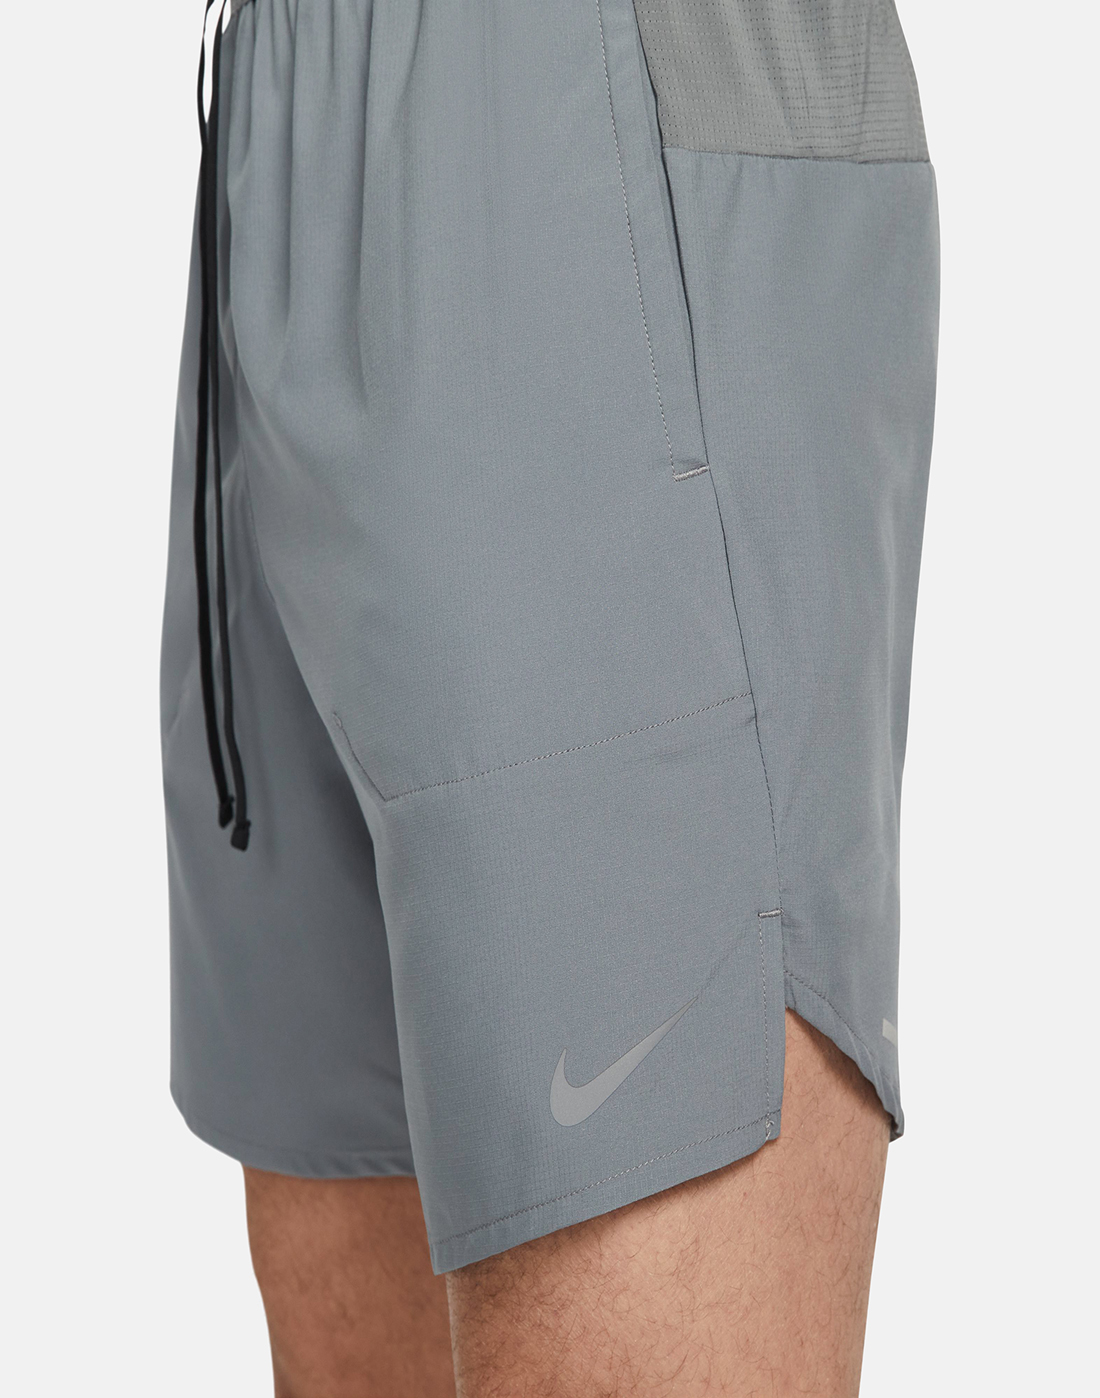 Nike Mens Flex Stride 7inch Short - Grey | Life Style Sports UK